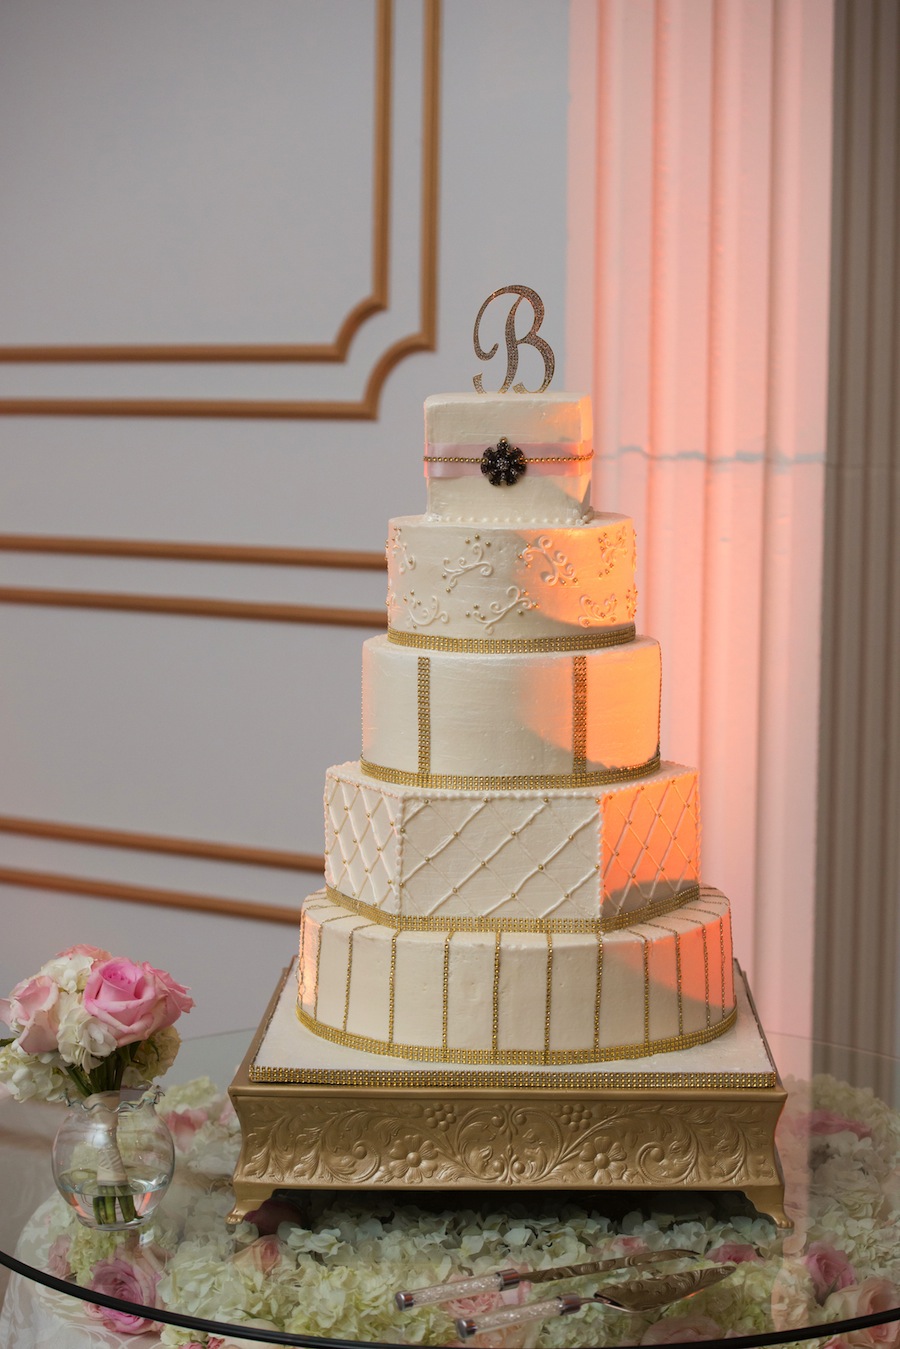 5-Tier Traditional Elegant Wedding Cake with Monogram Cake Topper